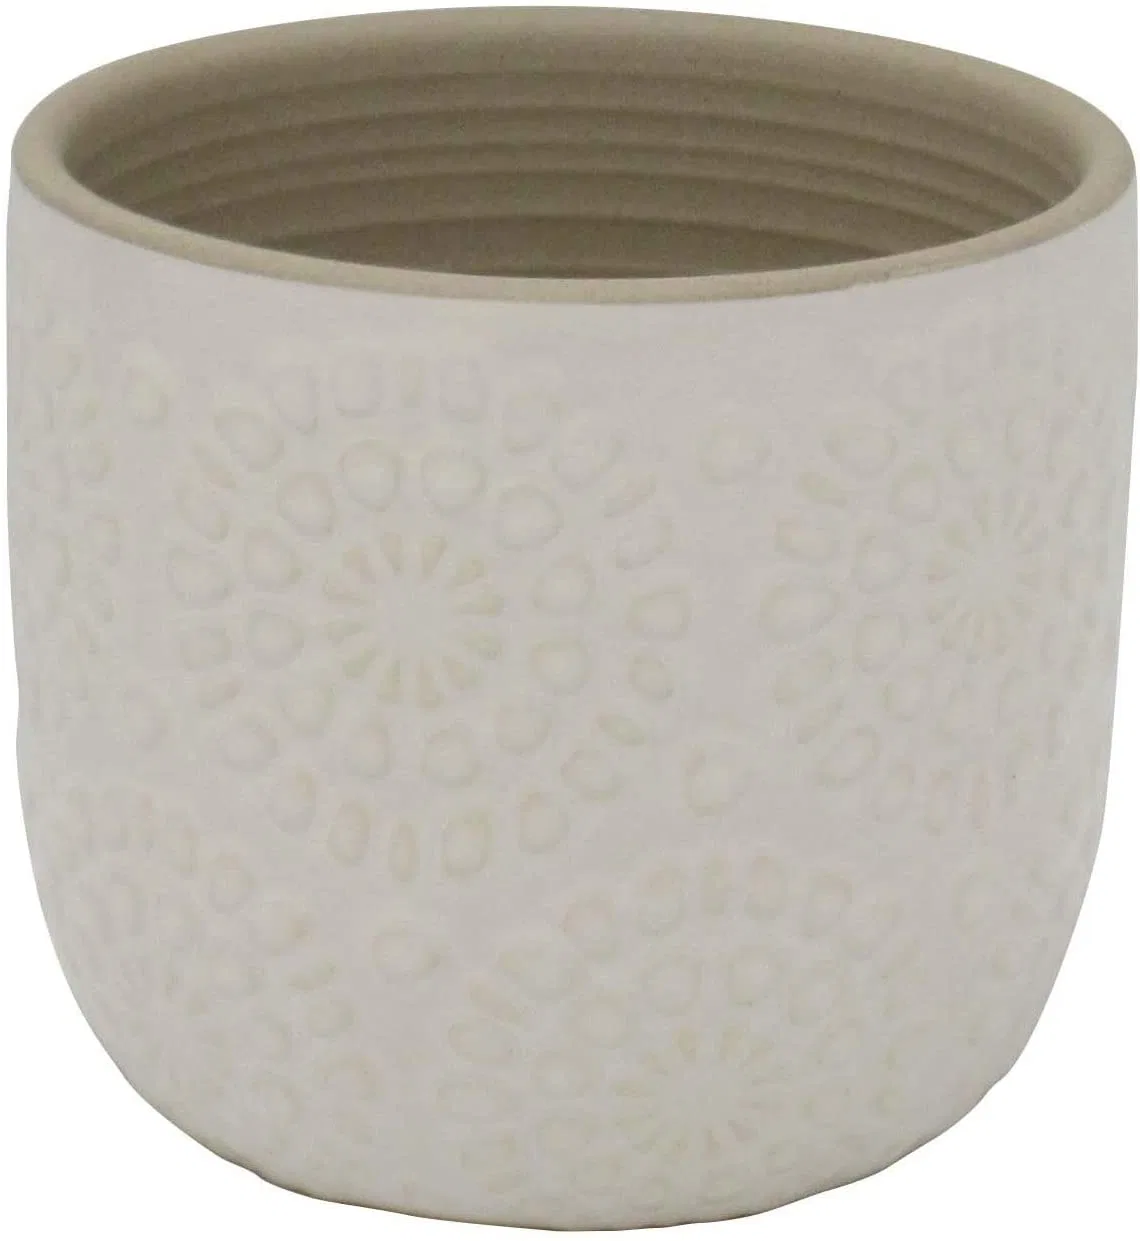 Stone & Beam Modern Ceramic Floral Embossed Decorative Planter Flower Pot White